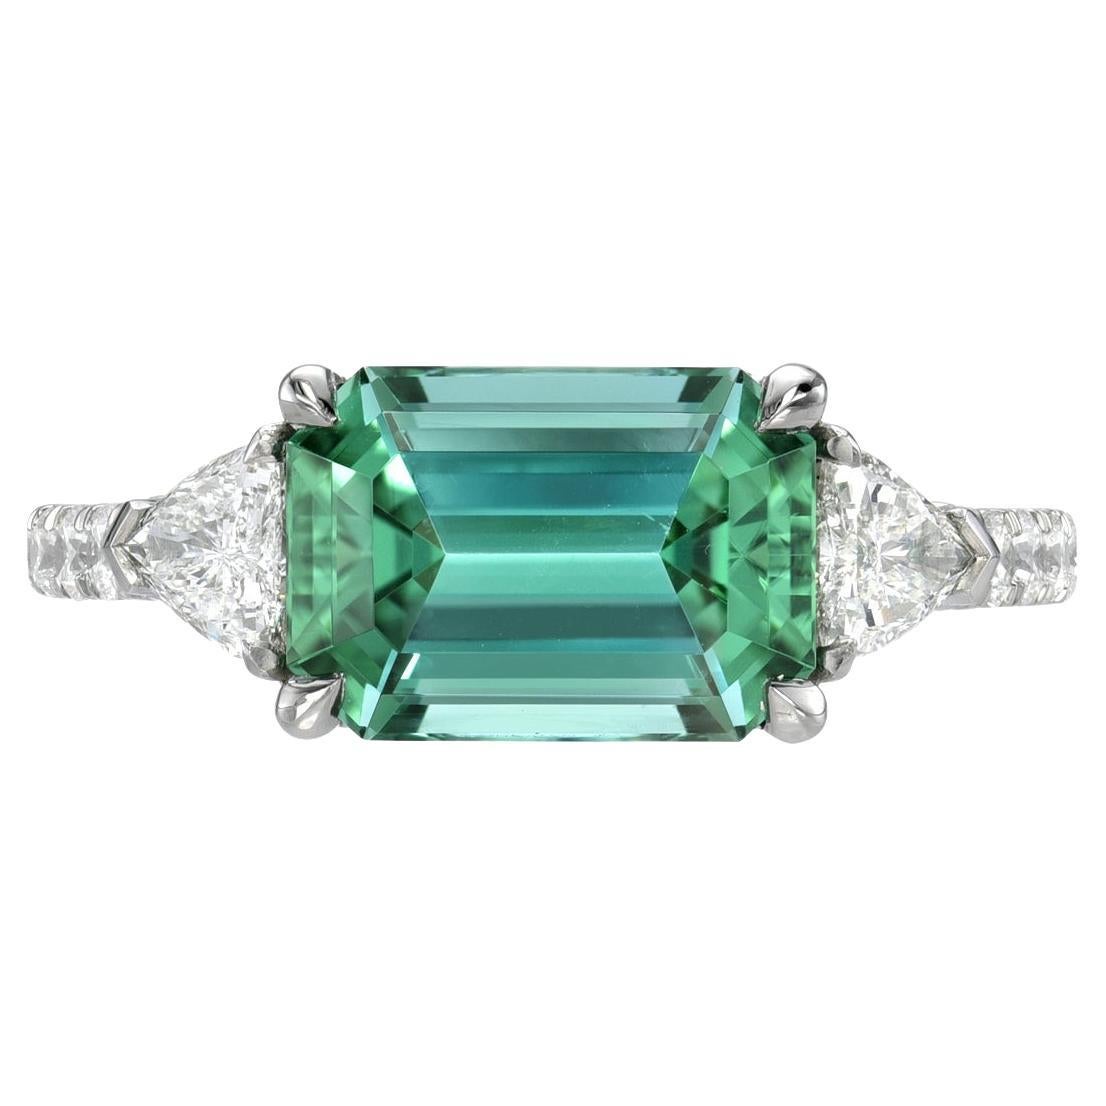 Lagoon Green Tourmaline Ring 2.69 Carat Emerald Cut For Sale